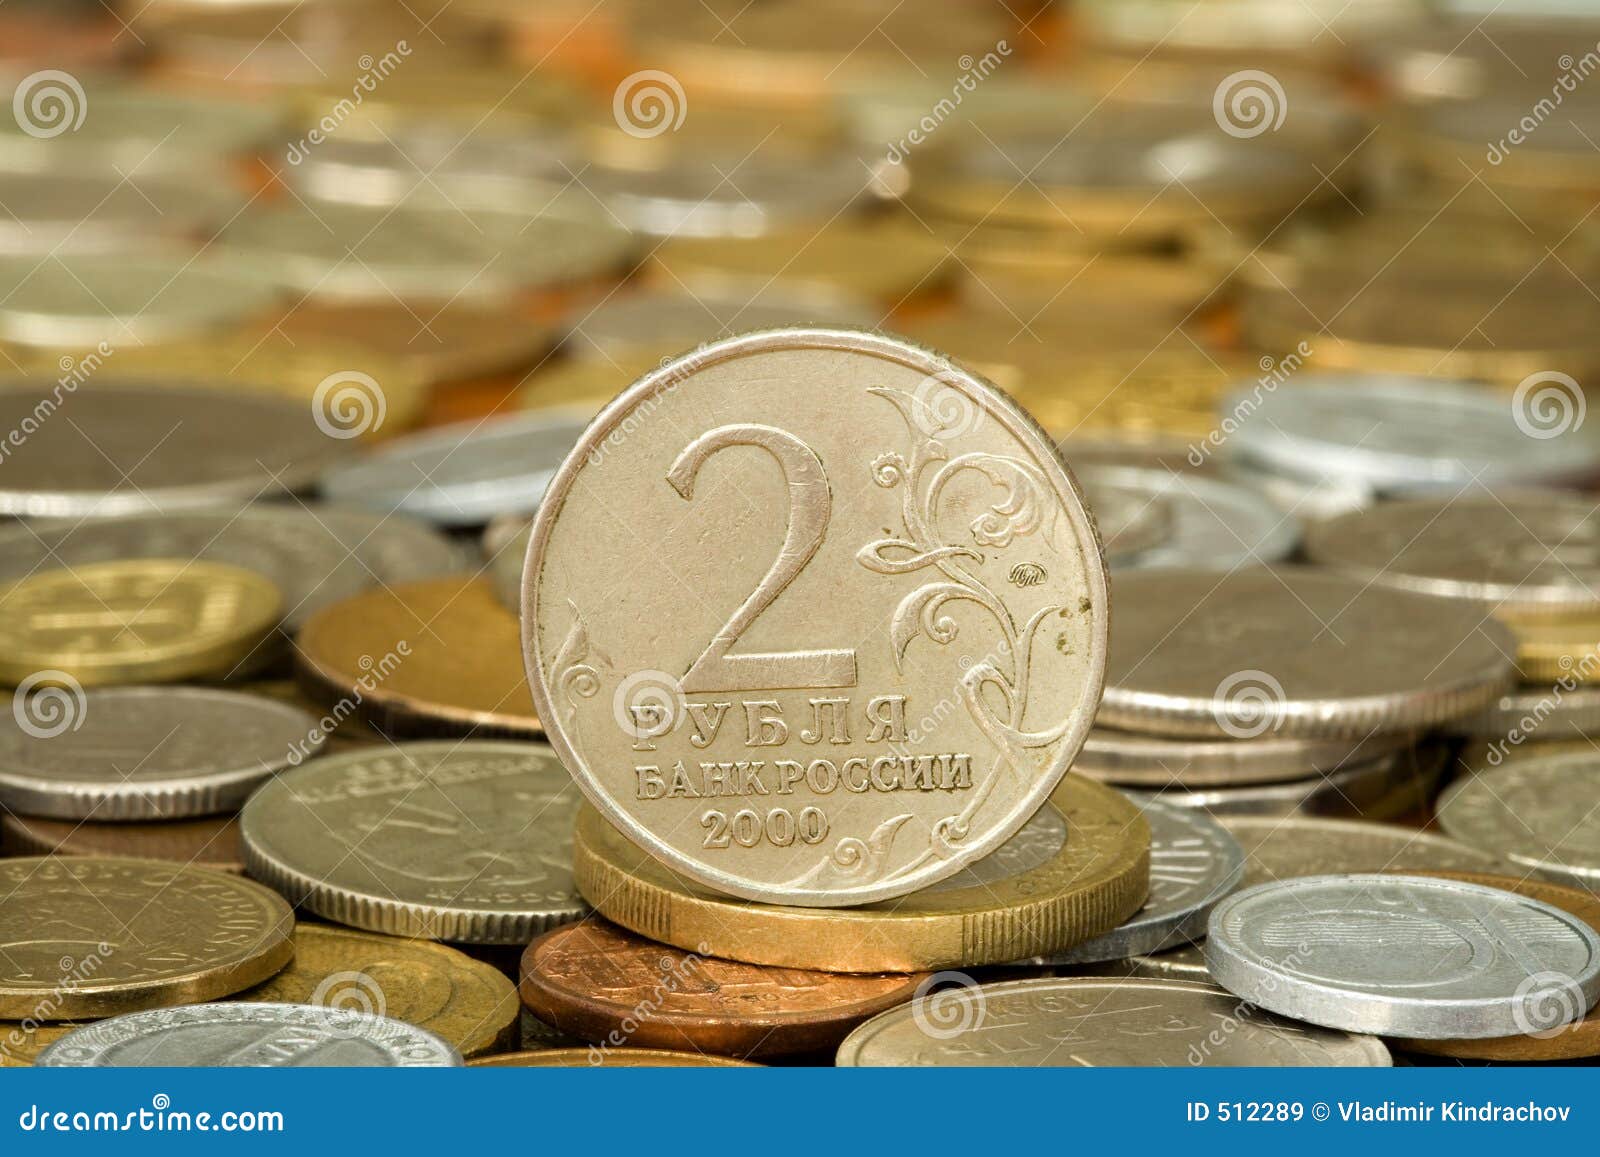 money 006 coin ruble